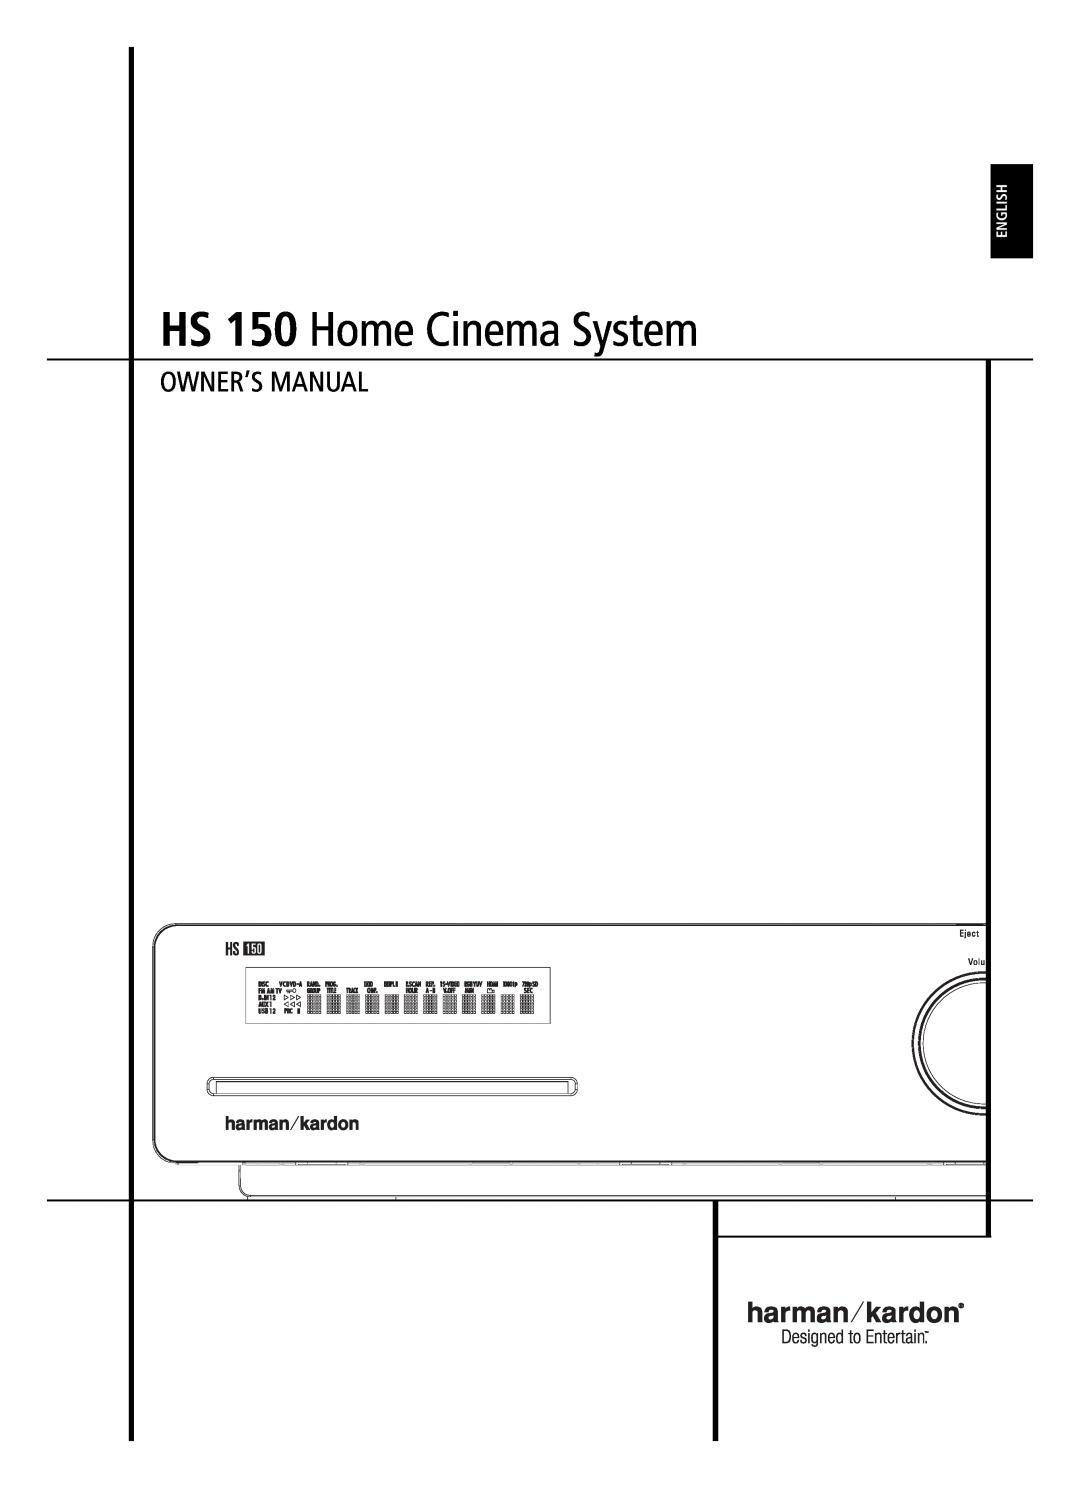 Harman-Kardon owner manual HS 150 Home Cinema System, English 